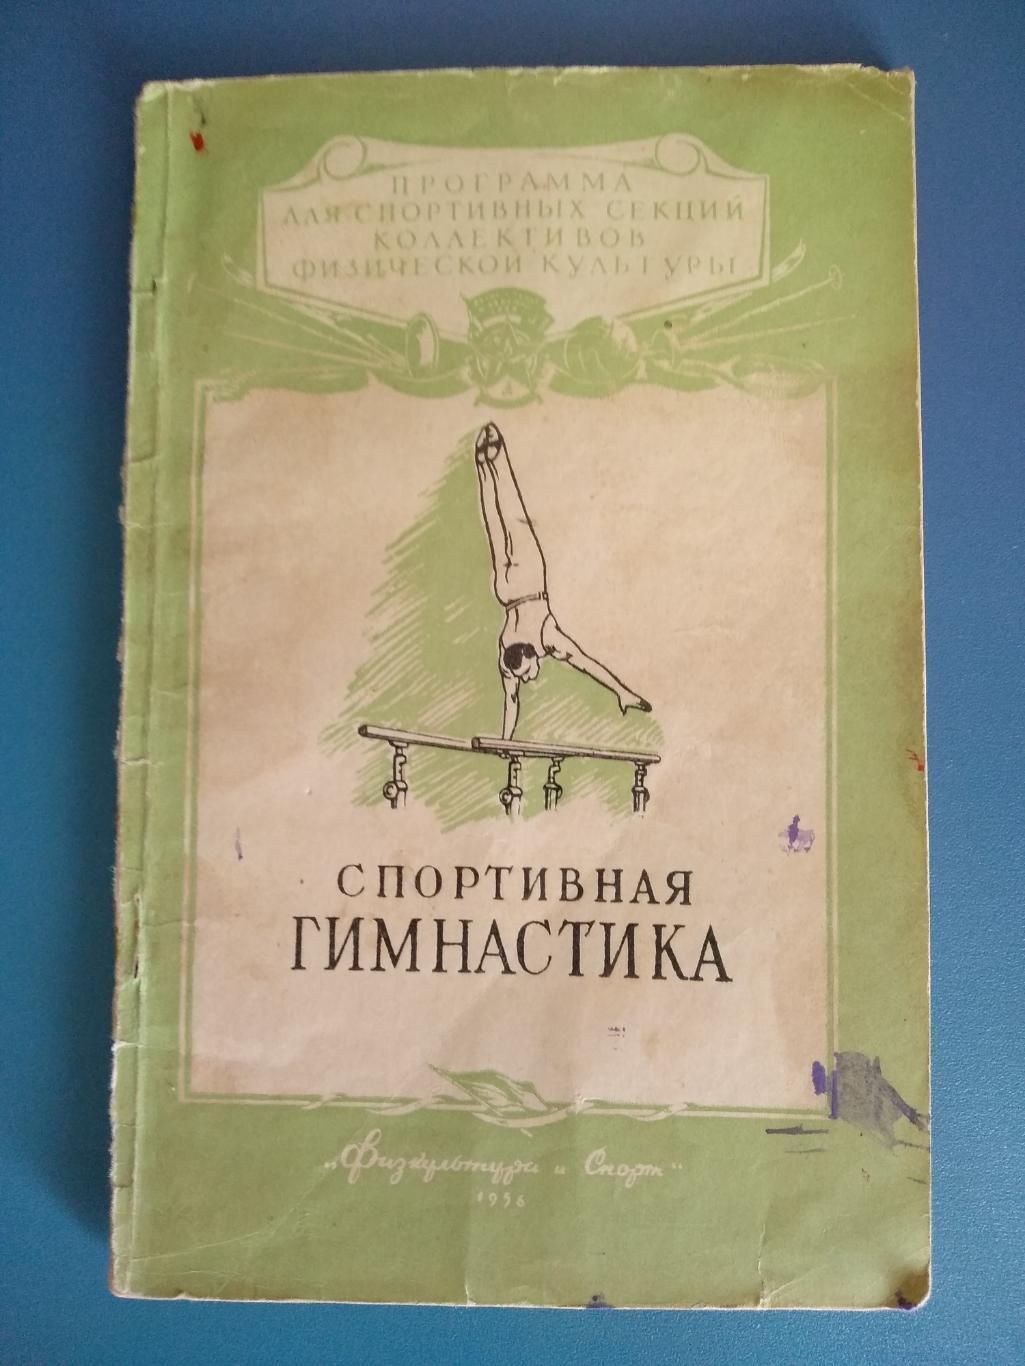 Издание: СССР. Спортивная гимнастика. Москва 1956